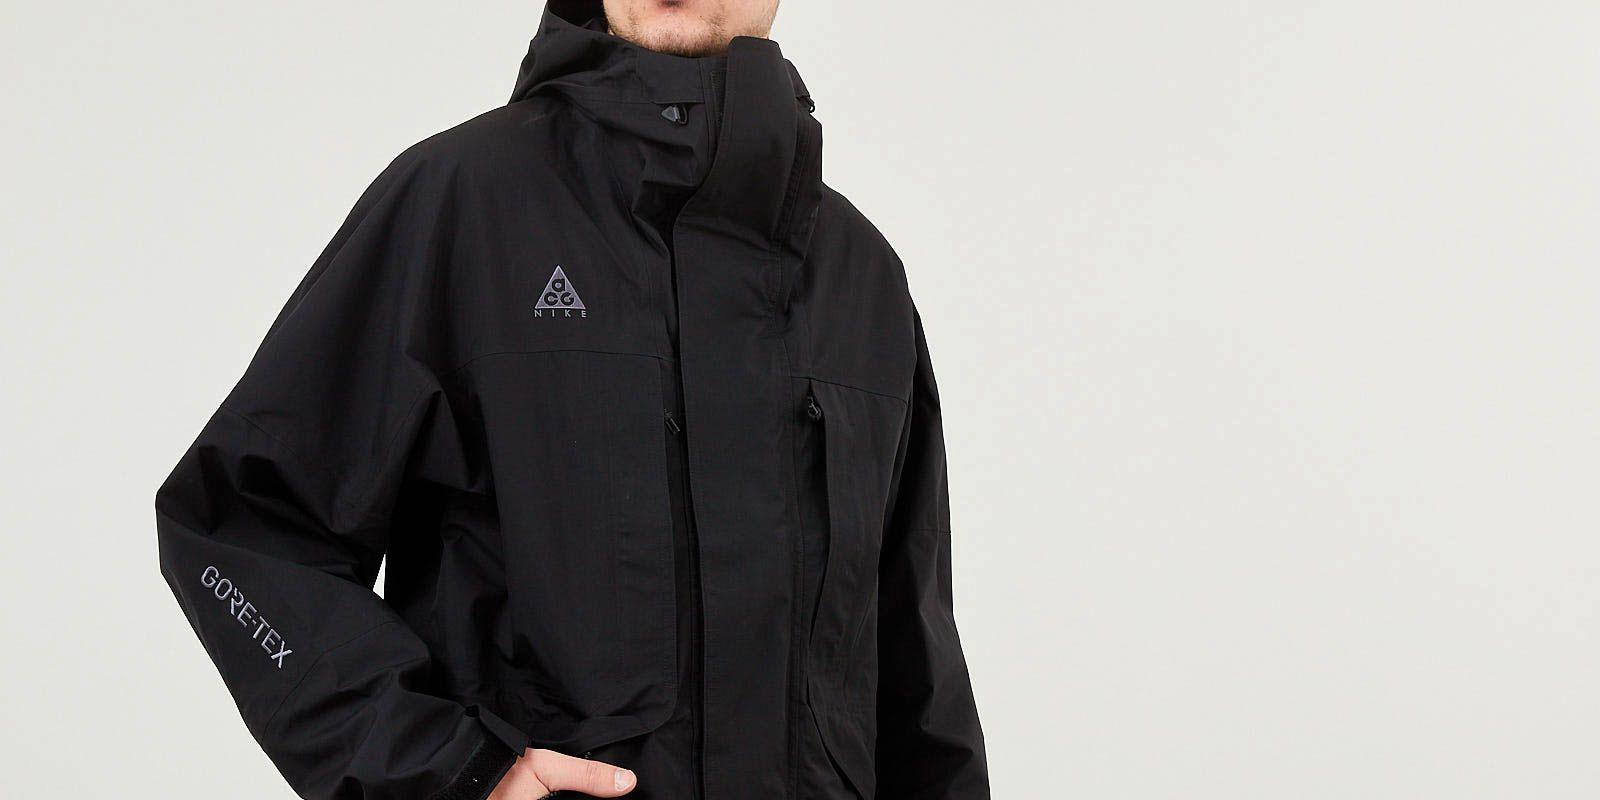 Nike Synthetic Acg Goretex Jacket Nrg Black for Men - Lyst